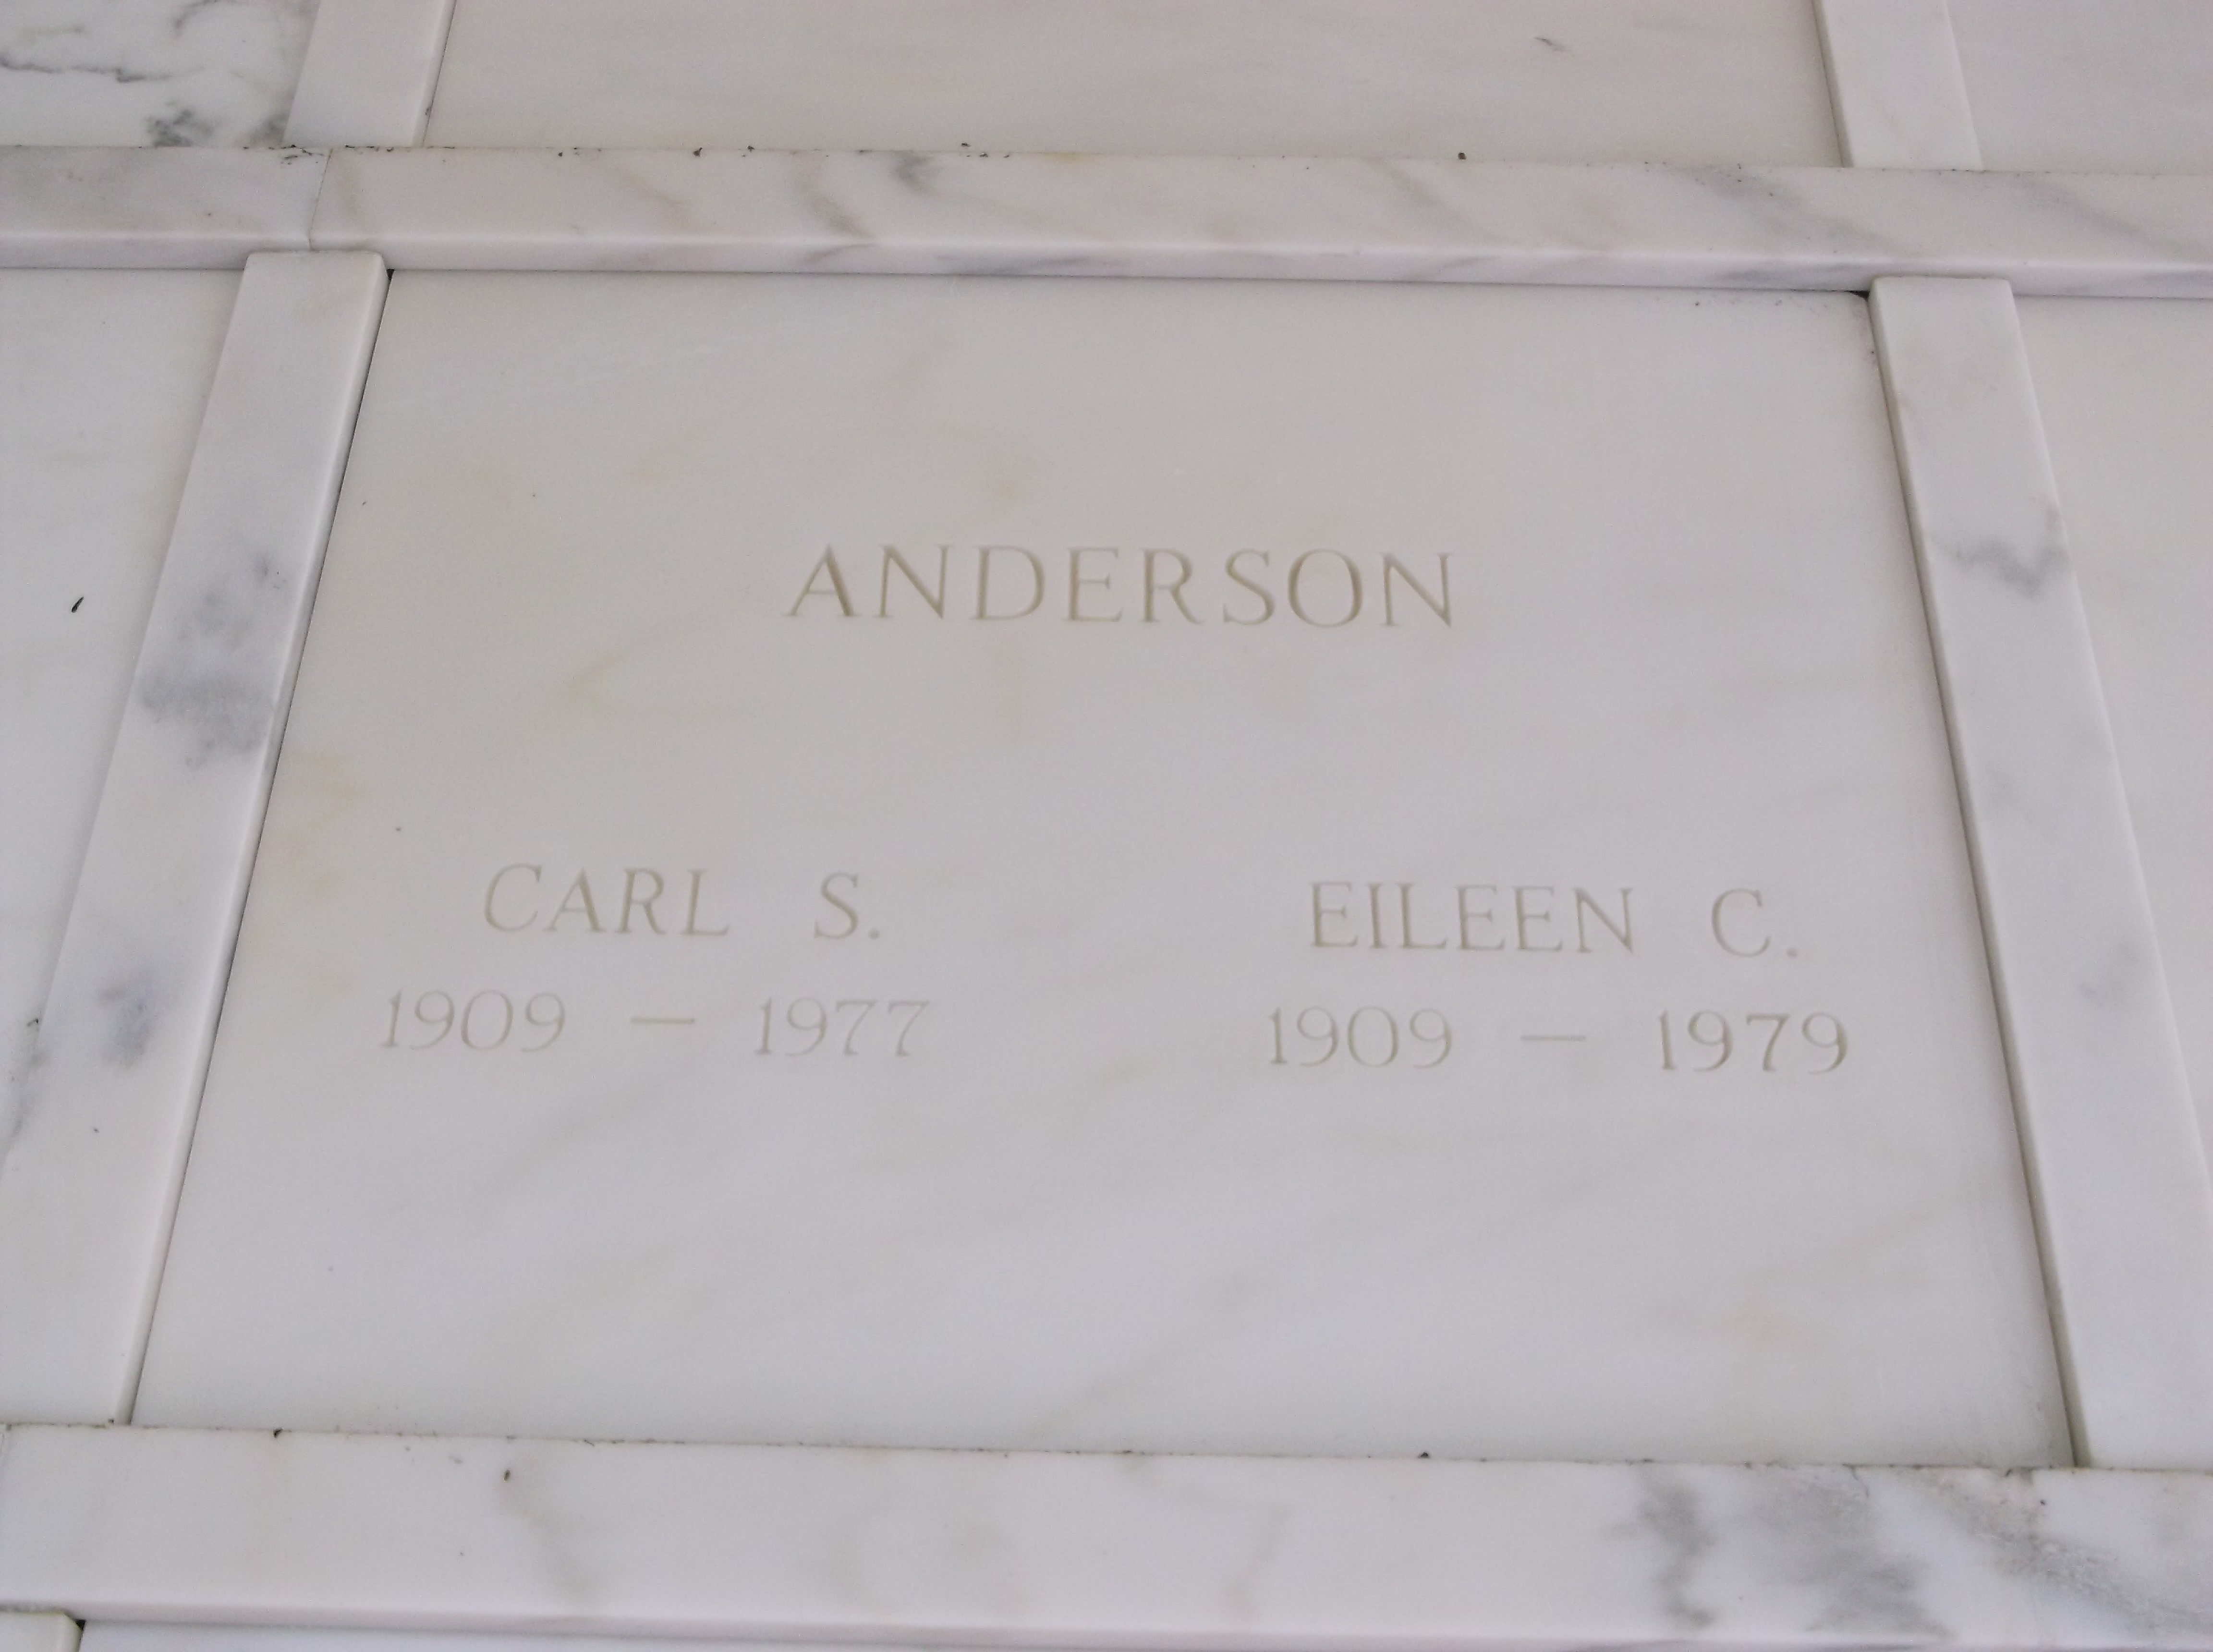 Eileen C Anderson